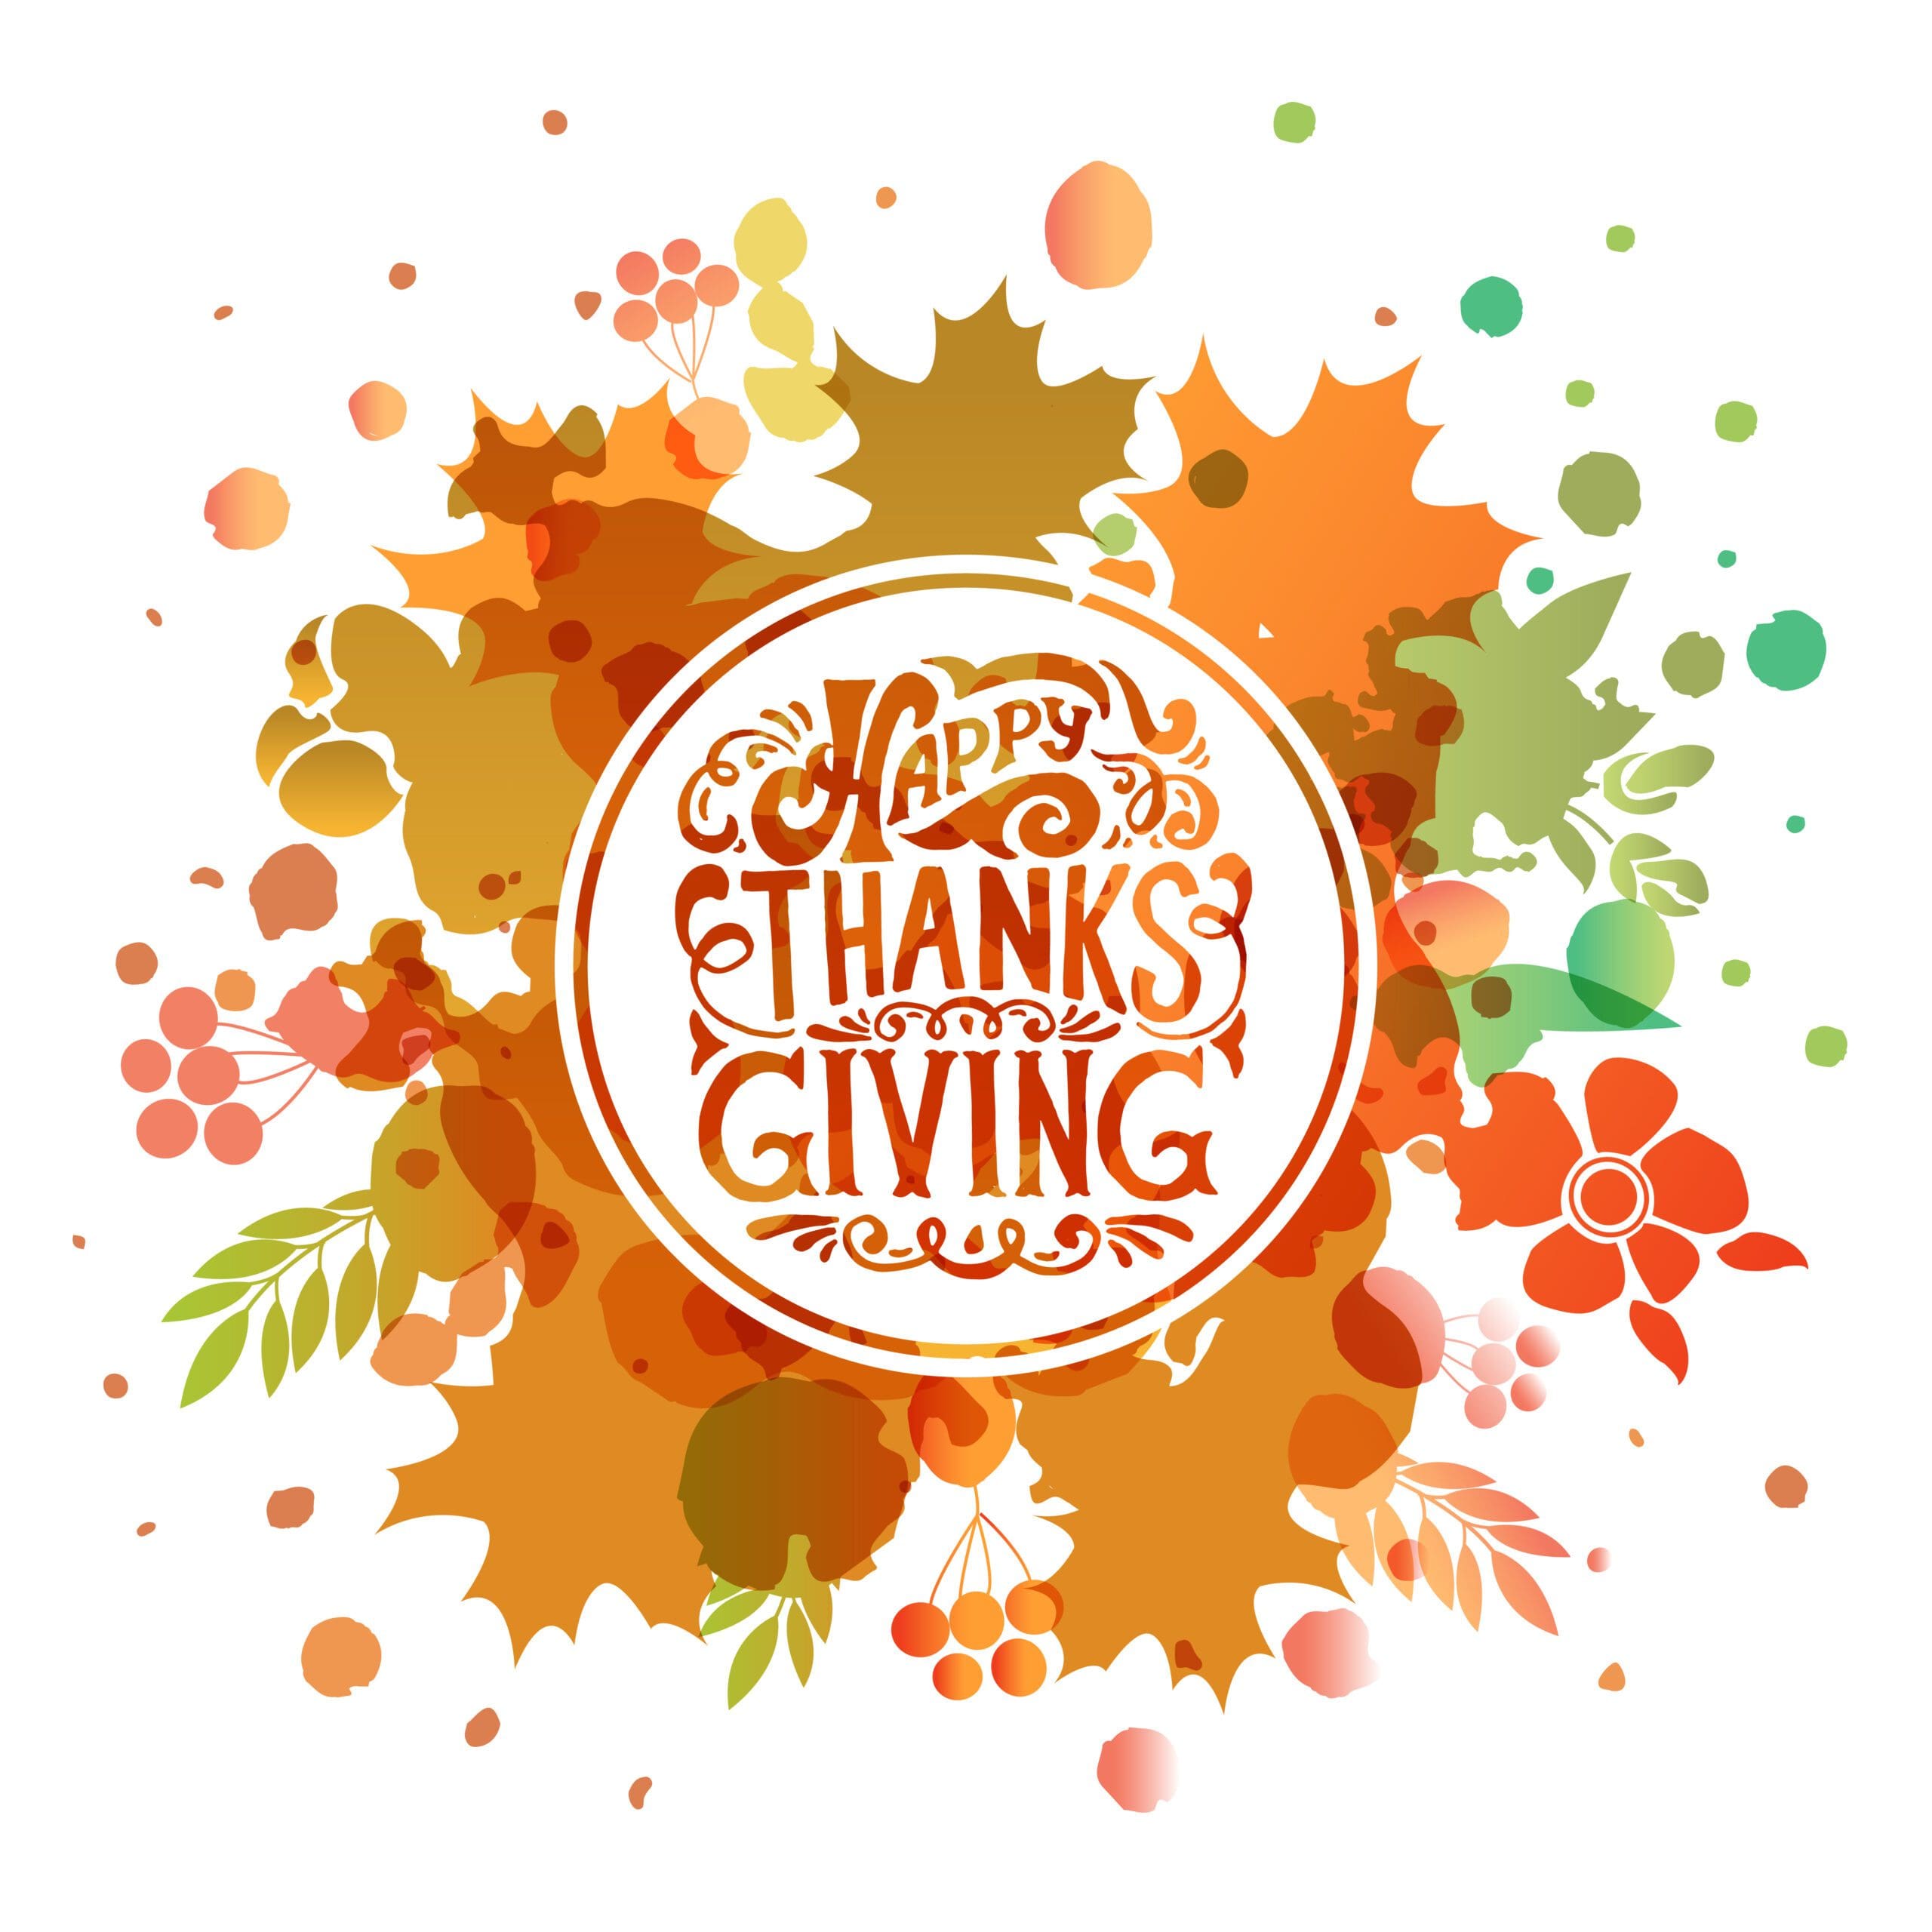 Creative Marketing Ideas for Thanksgiving – November 24th